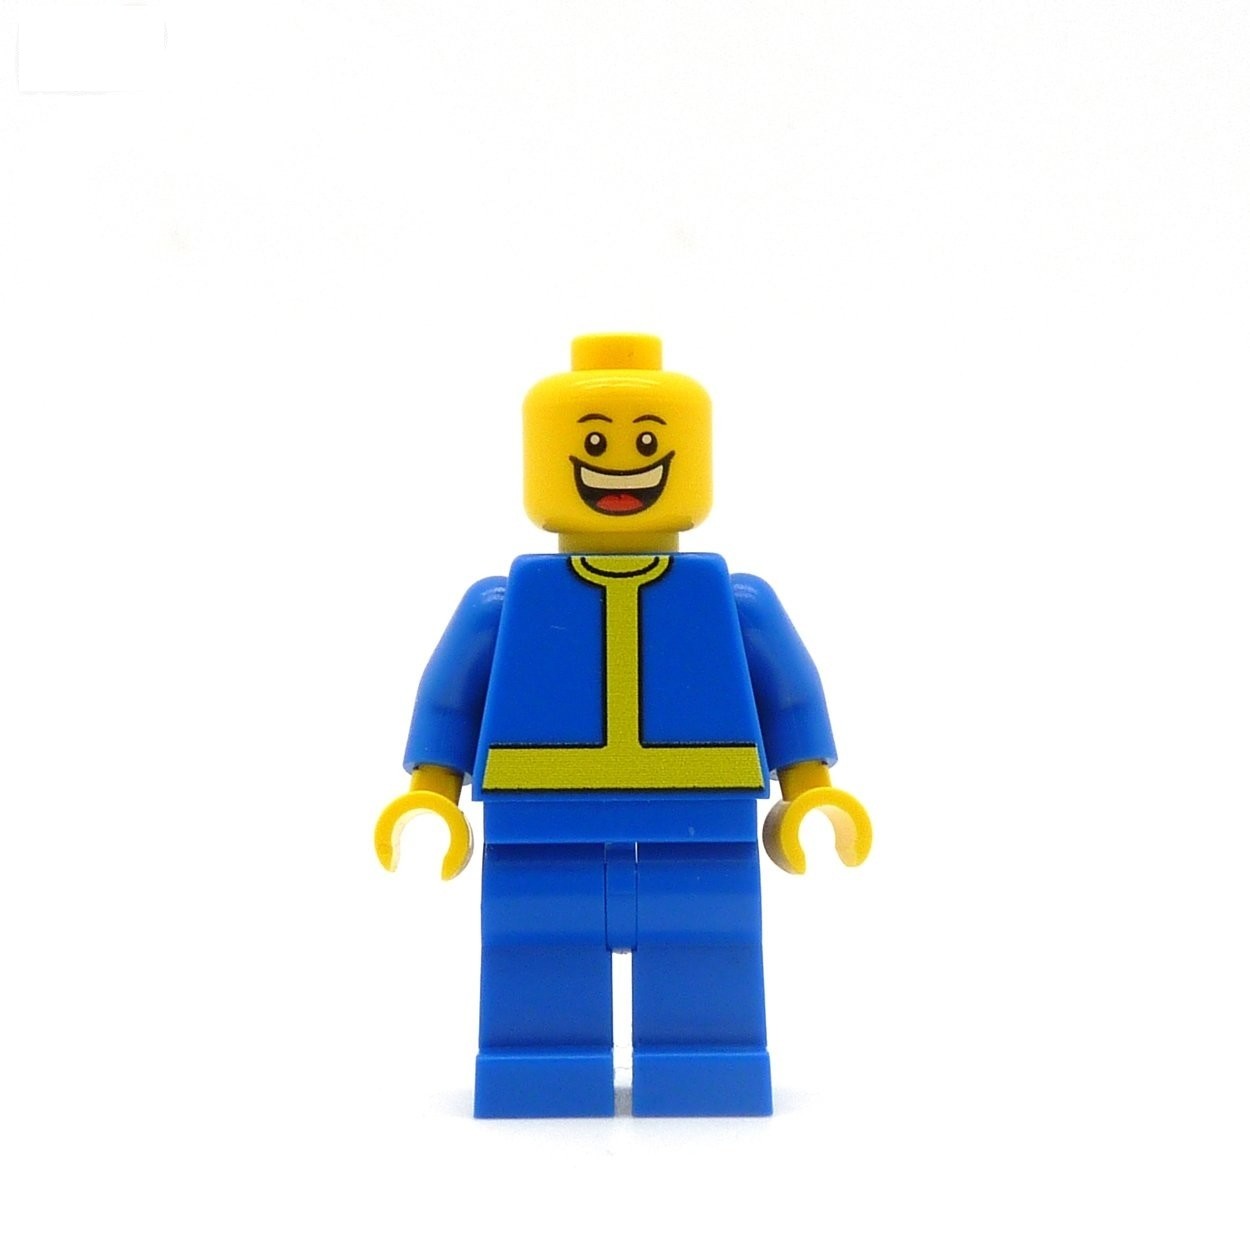 Vault Boy from Fallout Custom LEGO Minifigure